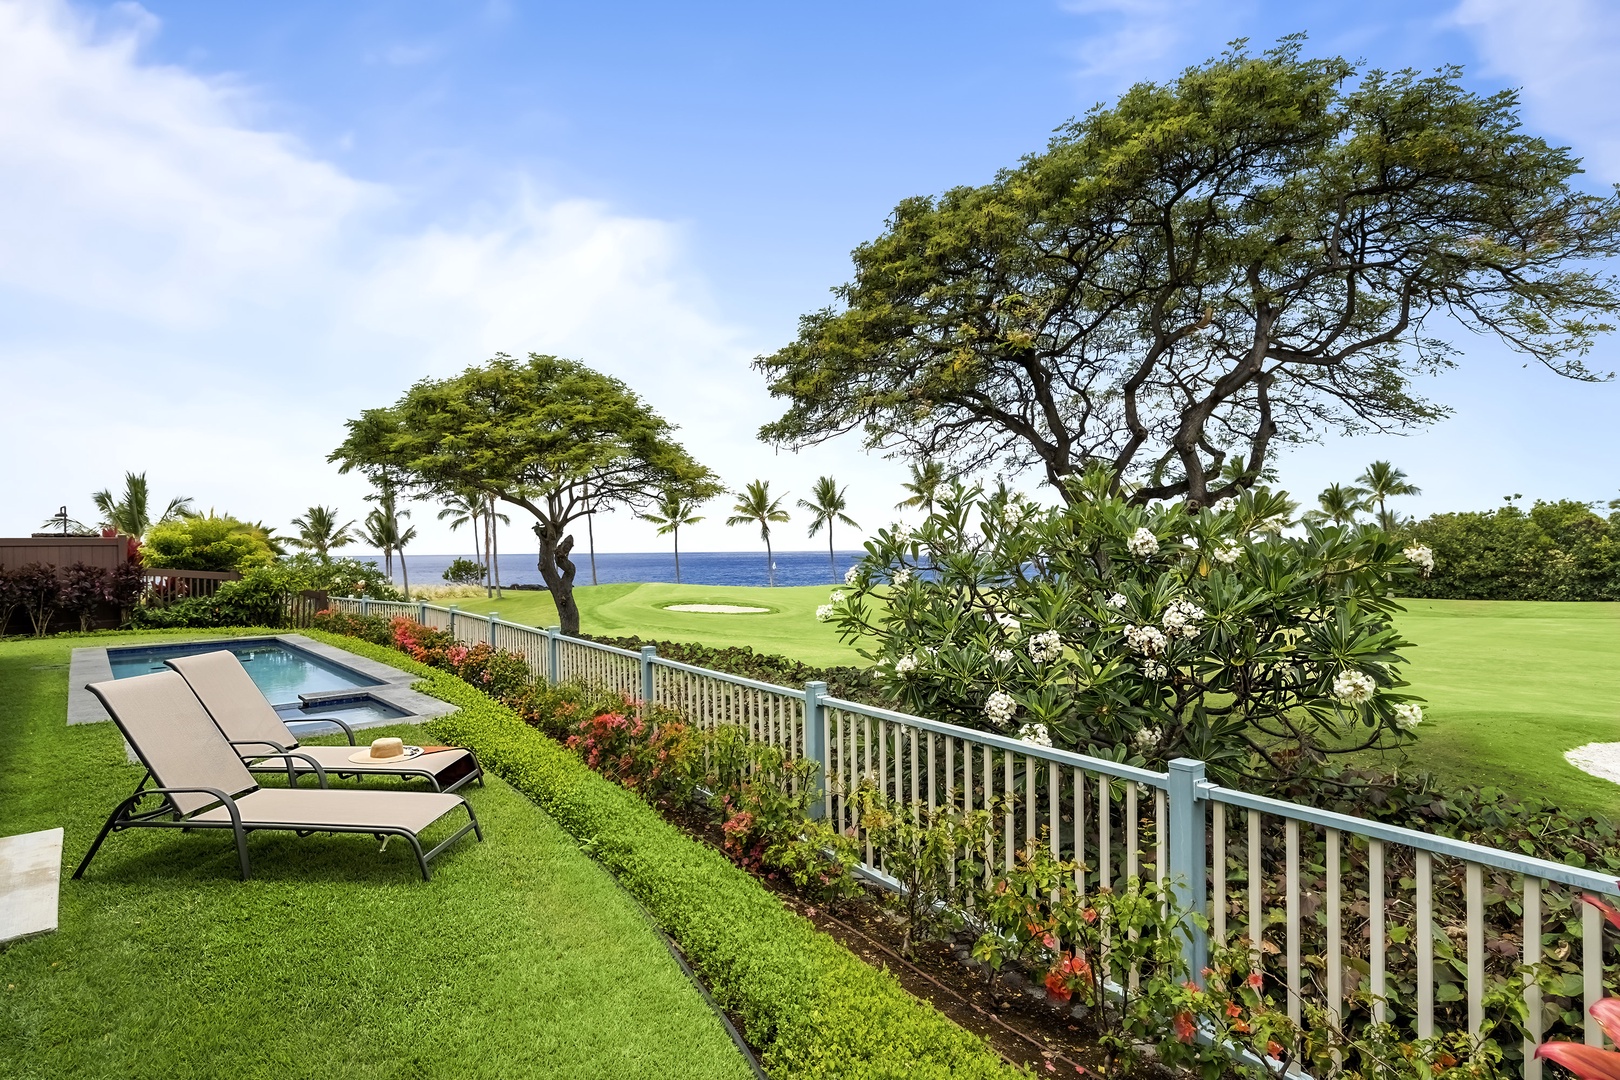 Kailua Kona Vacation Rentals, Holua Kai #27 - Manicured landscape!